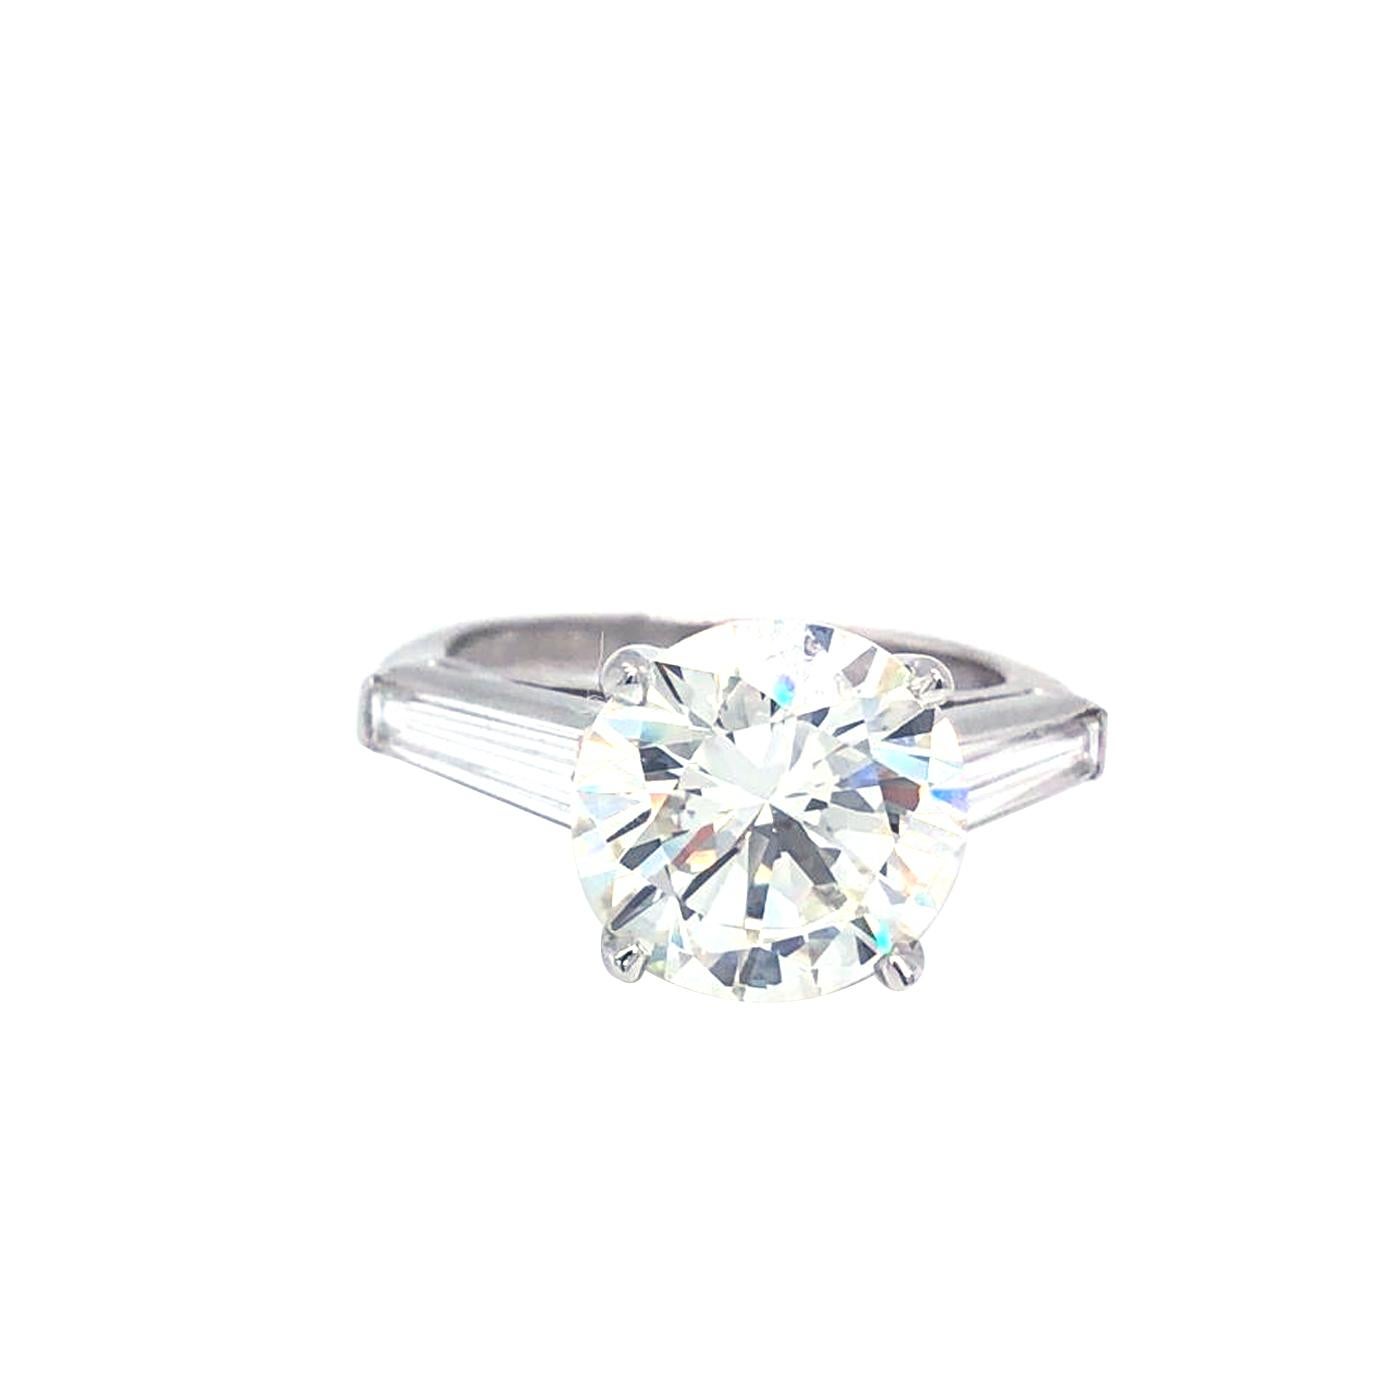 Modernist 4.03 Carat GIA Certified Round Brilliant Cut Diamond Platinum Engagement Ring